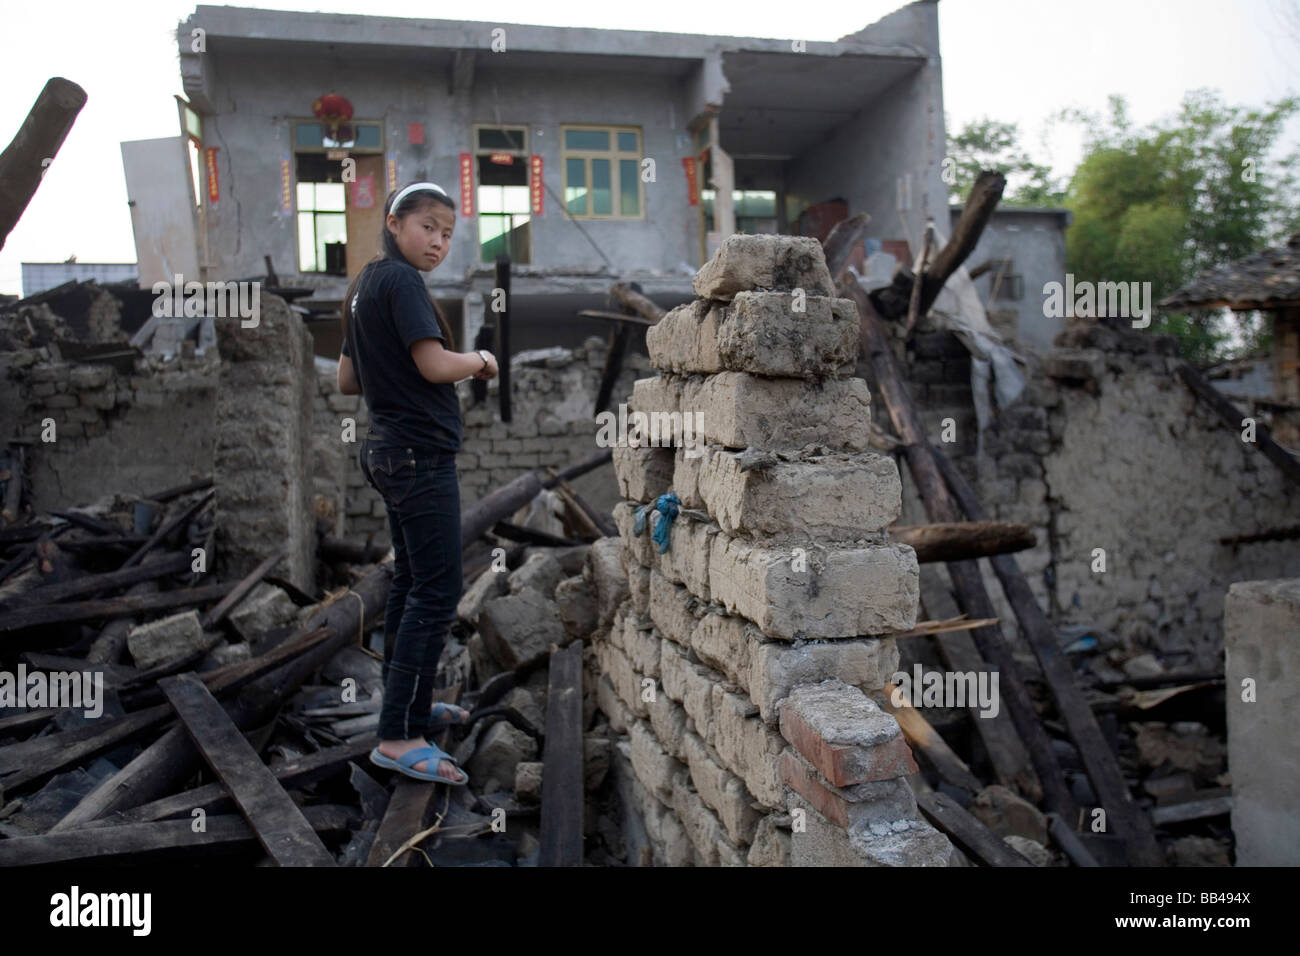 Devastation following an earthquake in Sichuan, China. Stock Photo